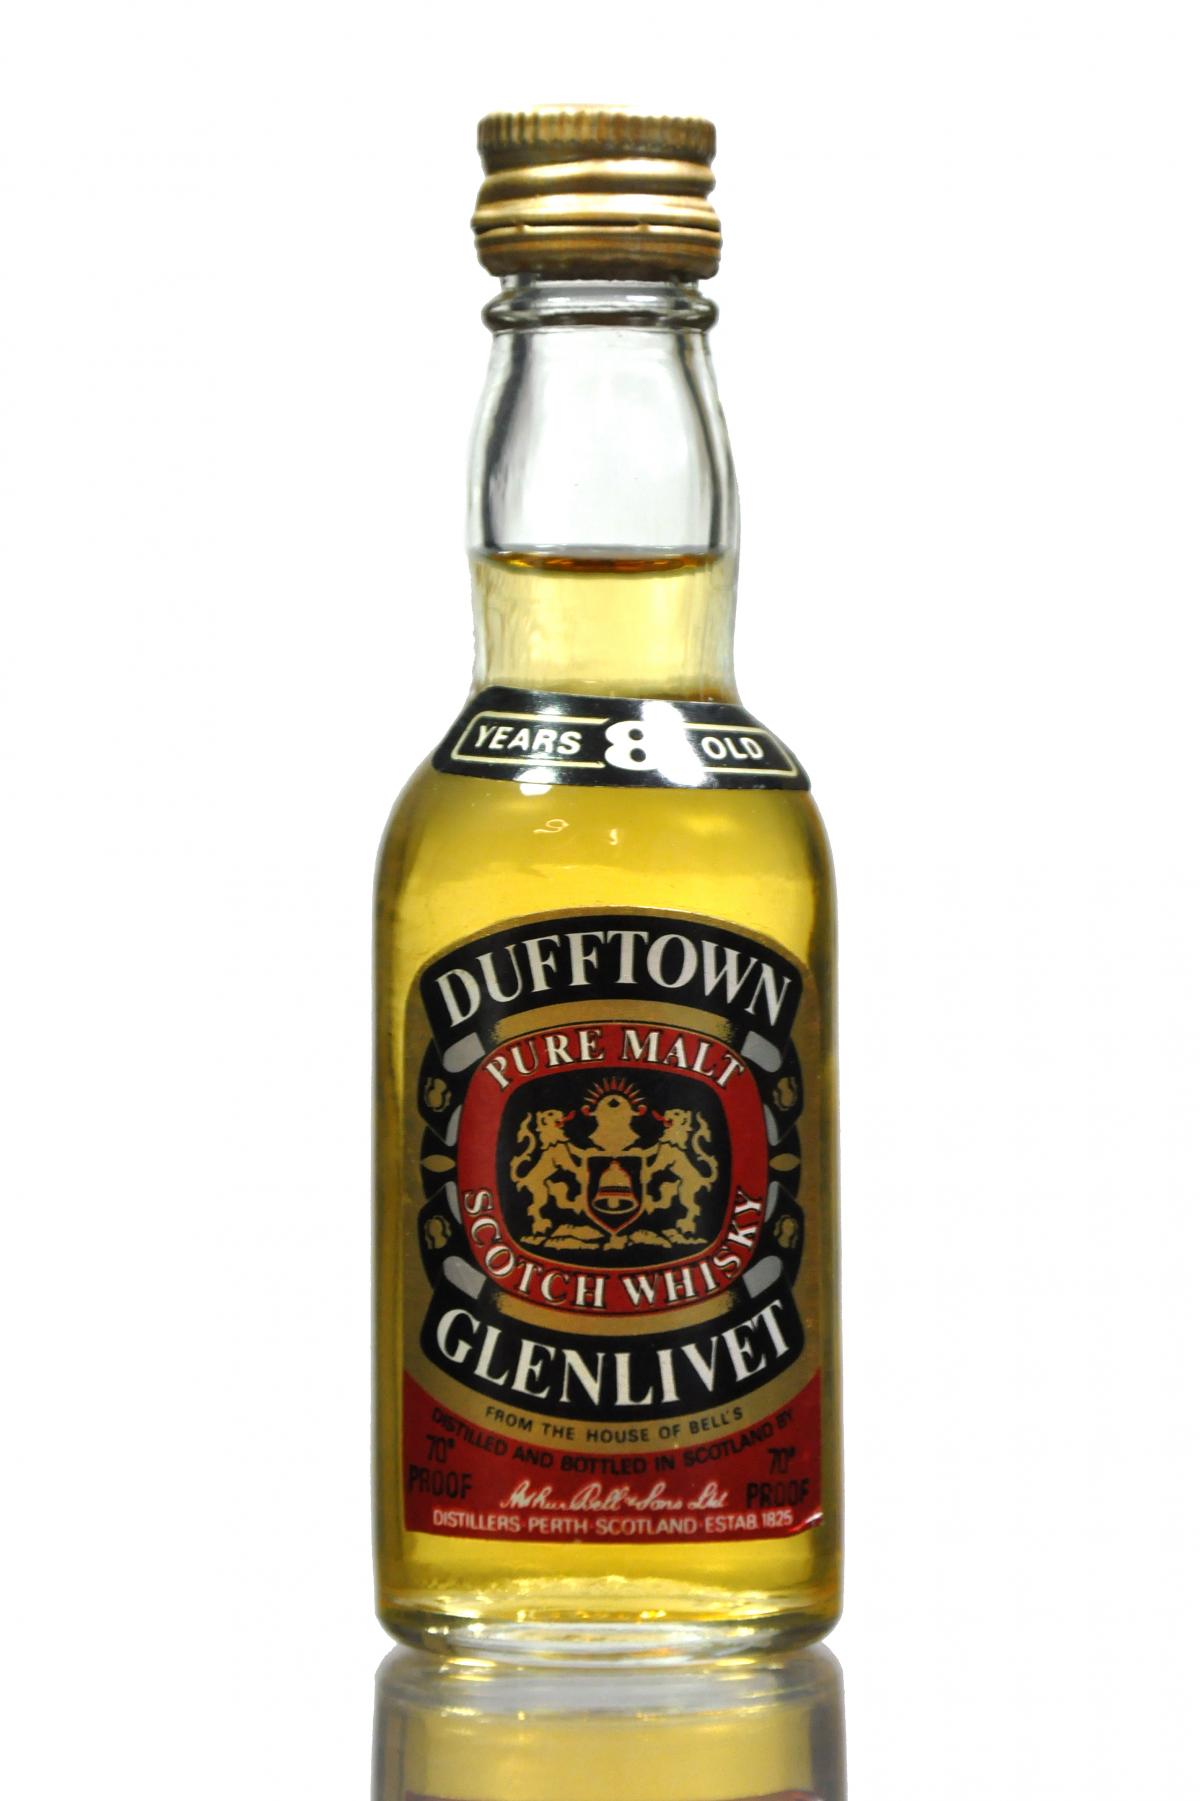 Dufftown-Glenlivet 8 Year Old Miniature